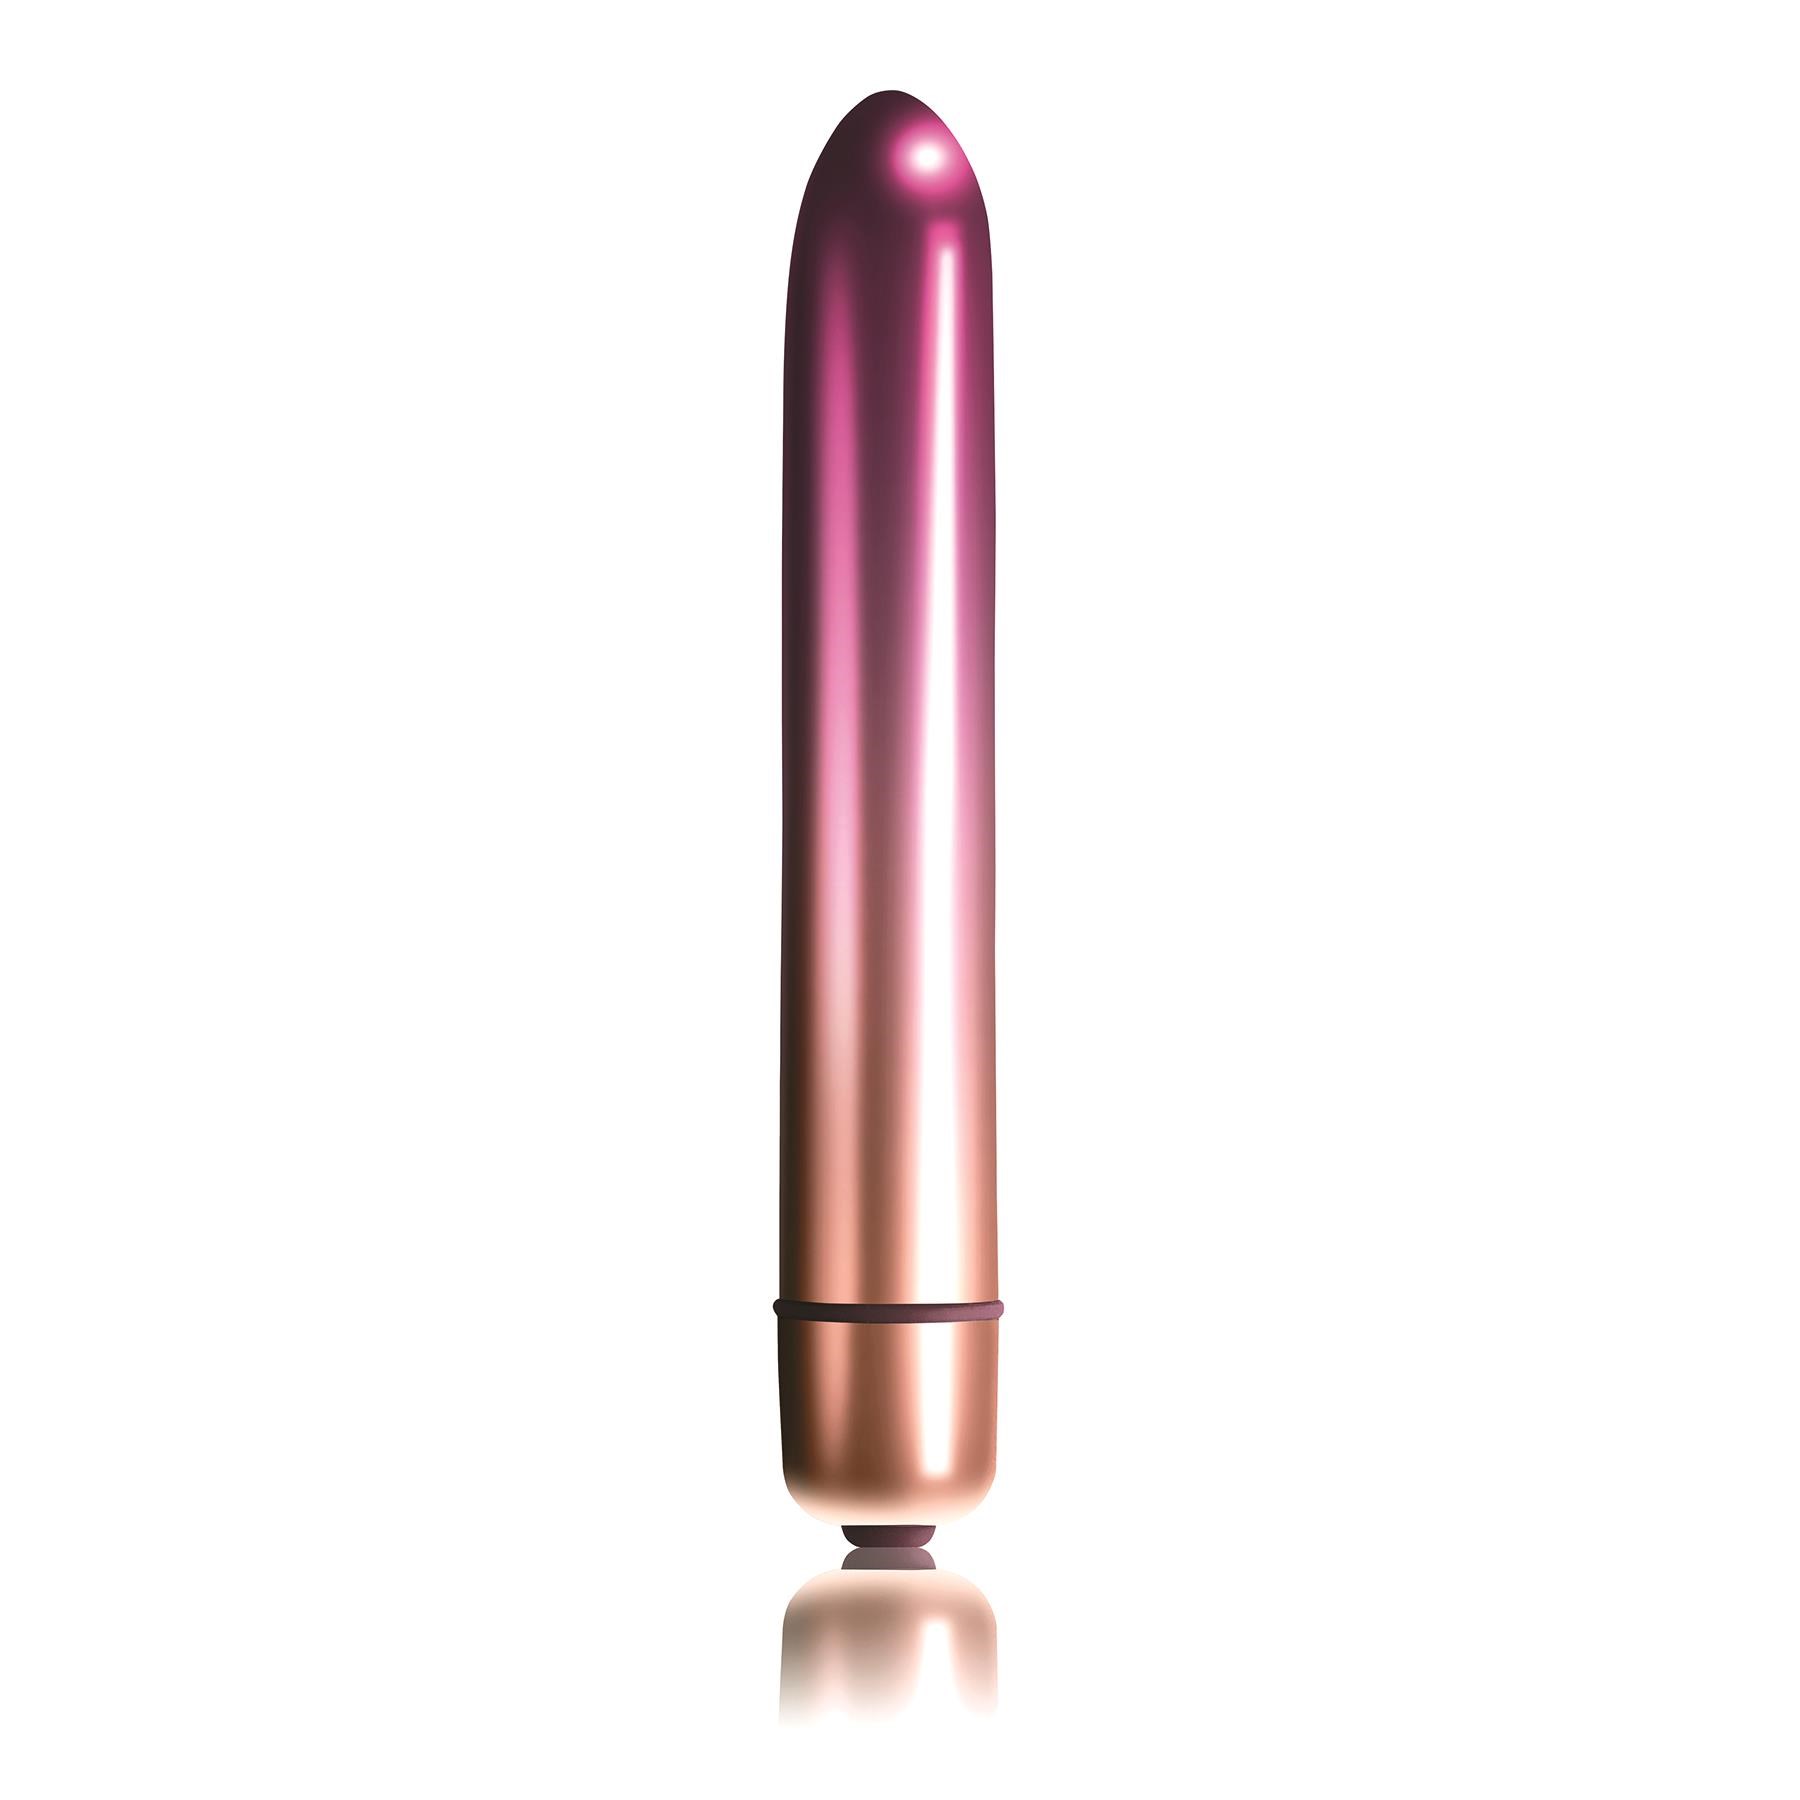 Climaximum Sapora Bullet Vibrator Upright Product Shot